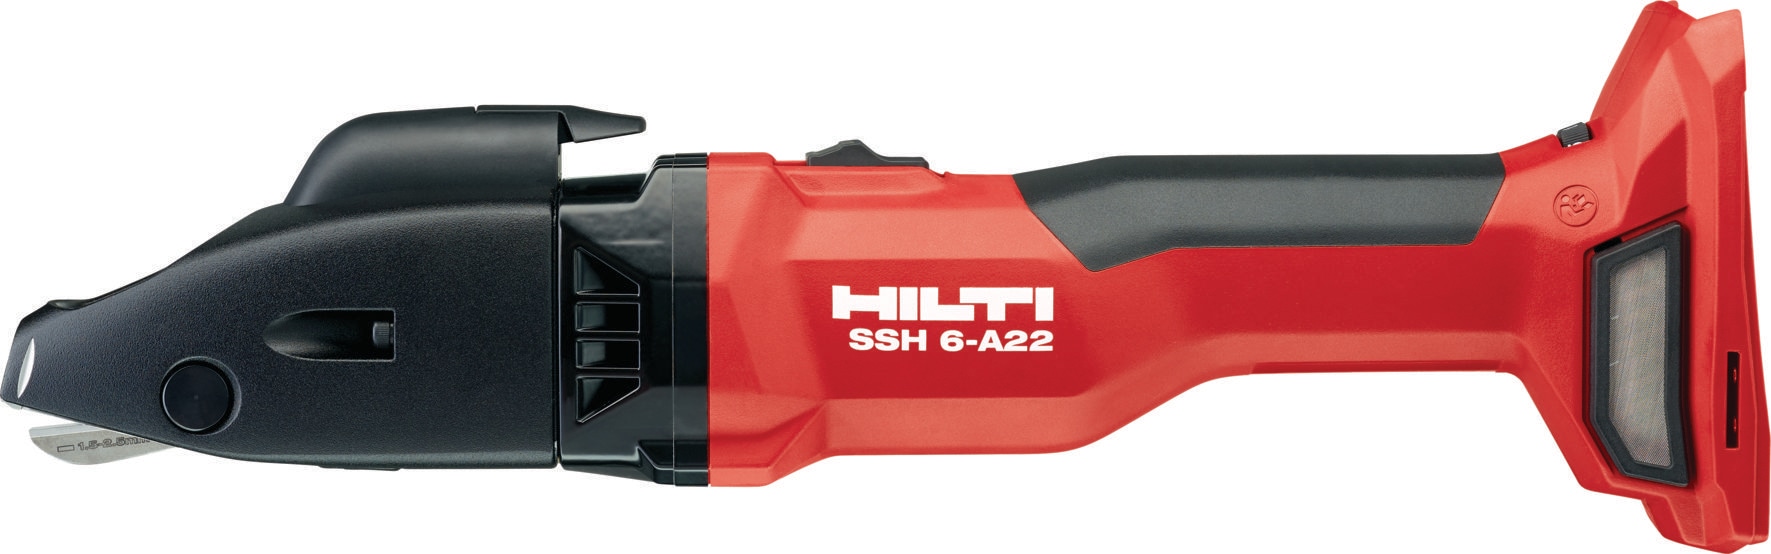 HILTI ヒルティ 充電式ニブラー SPN 6-A22 ケース 2288450